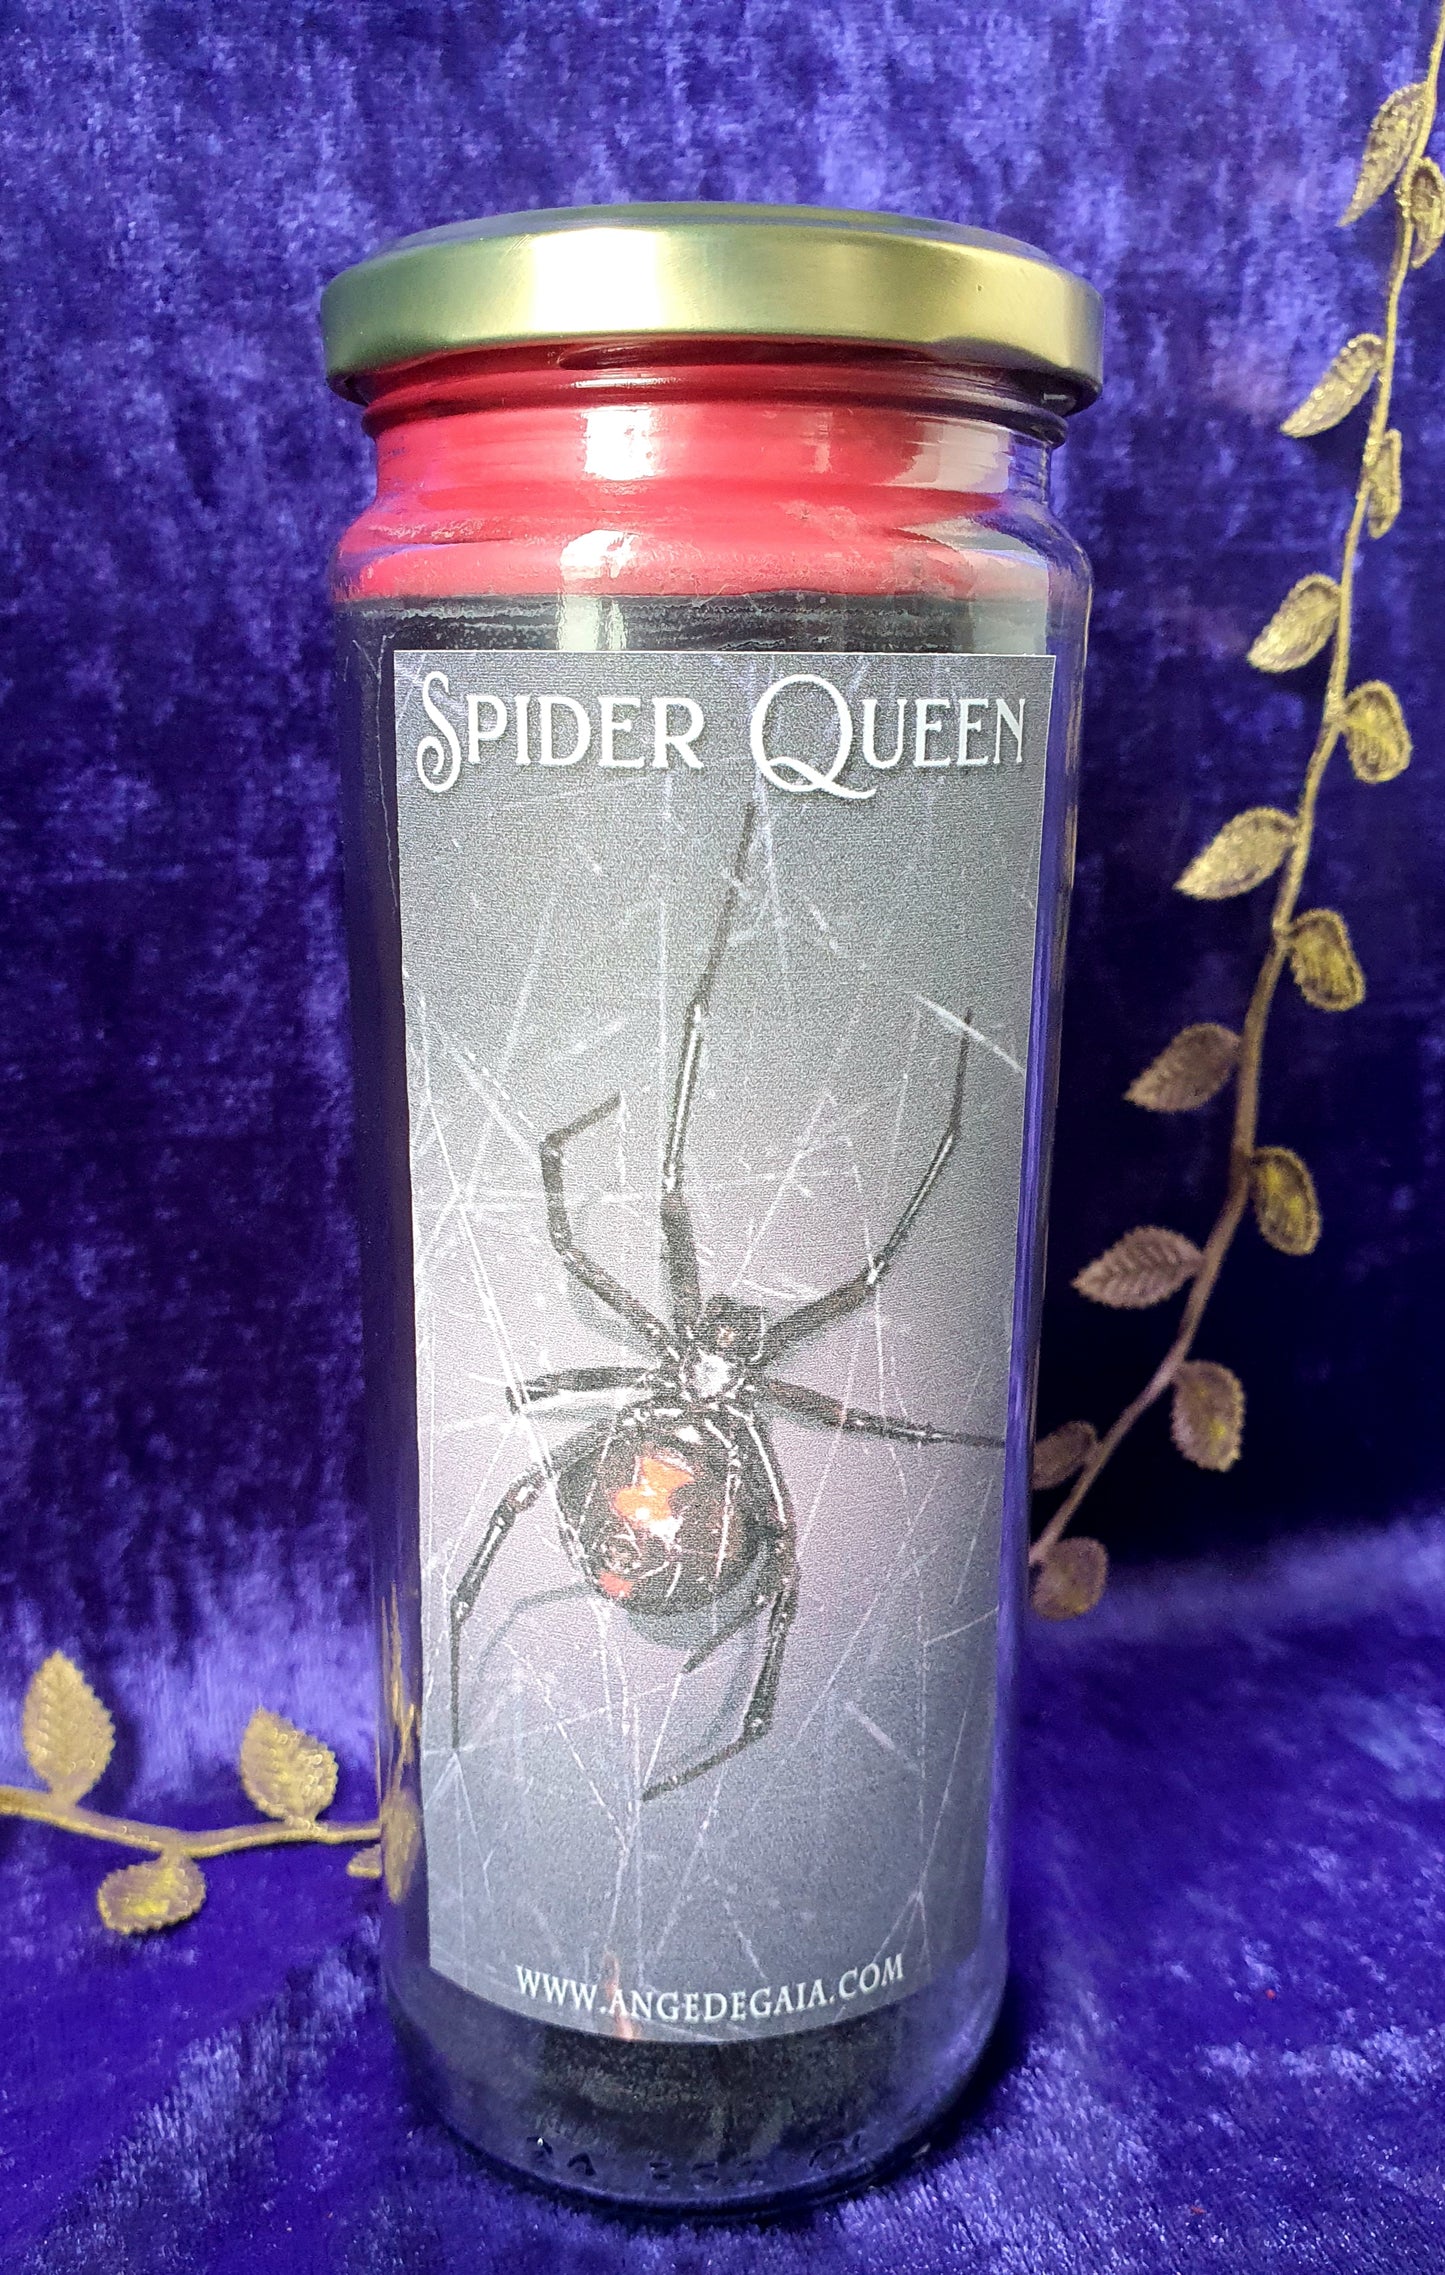 Bougie Spider Queen HooDoo, 7 days candle, rituel de protection défense 